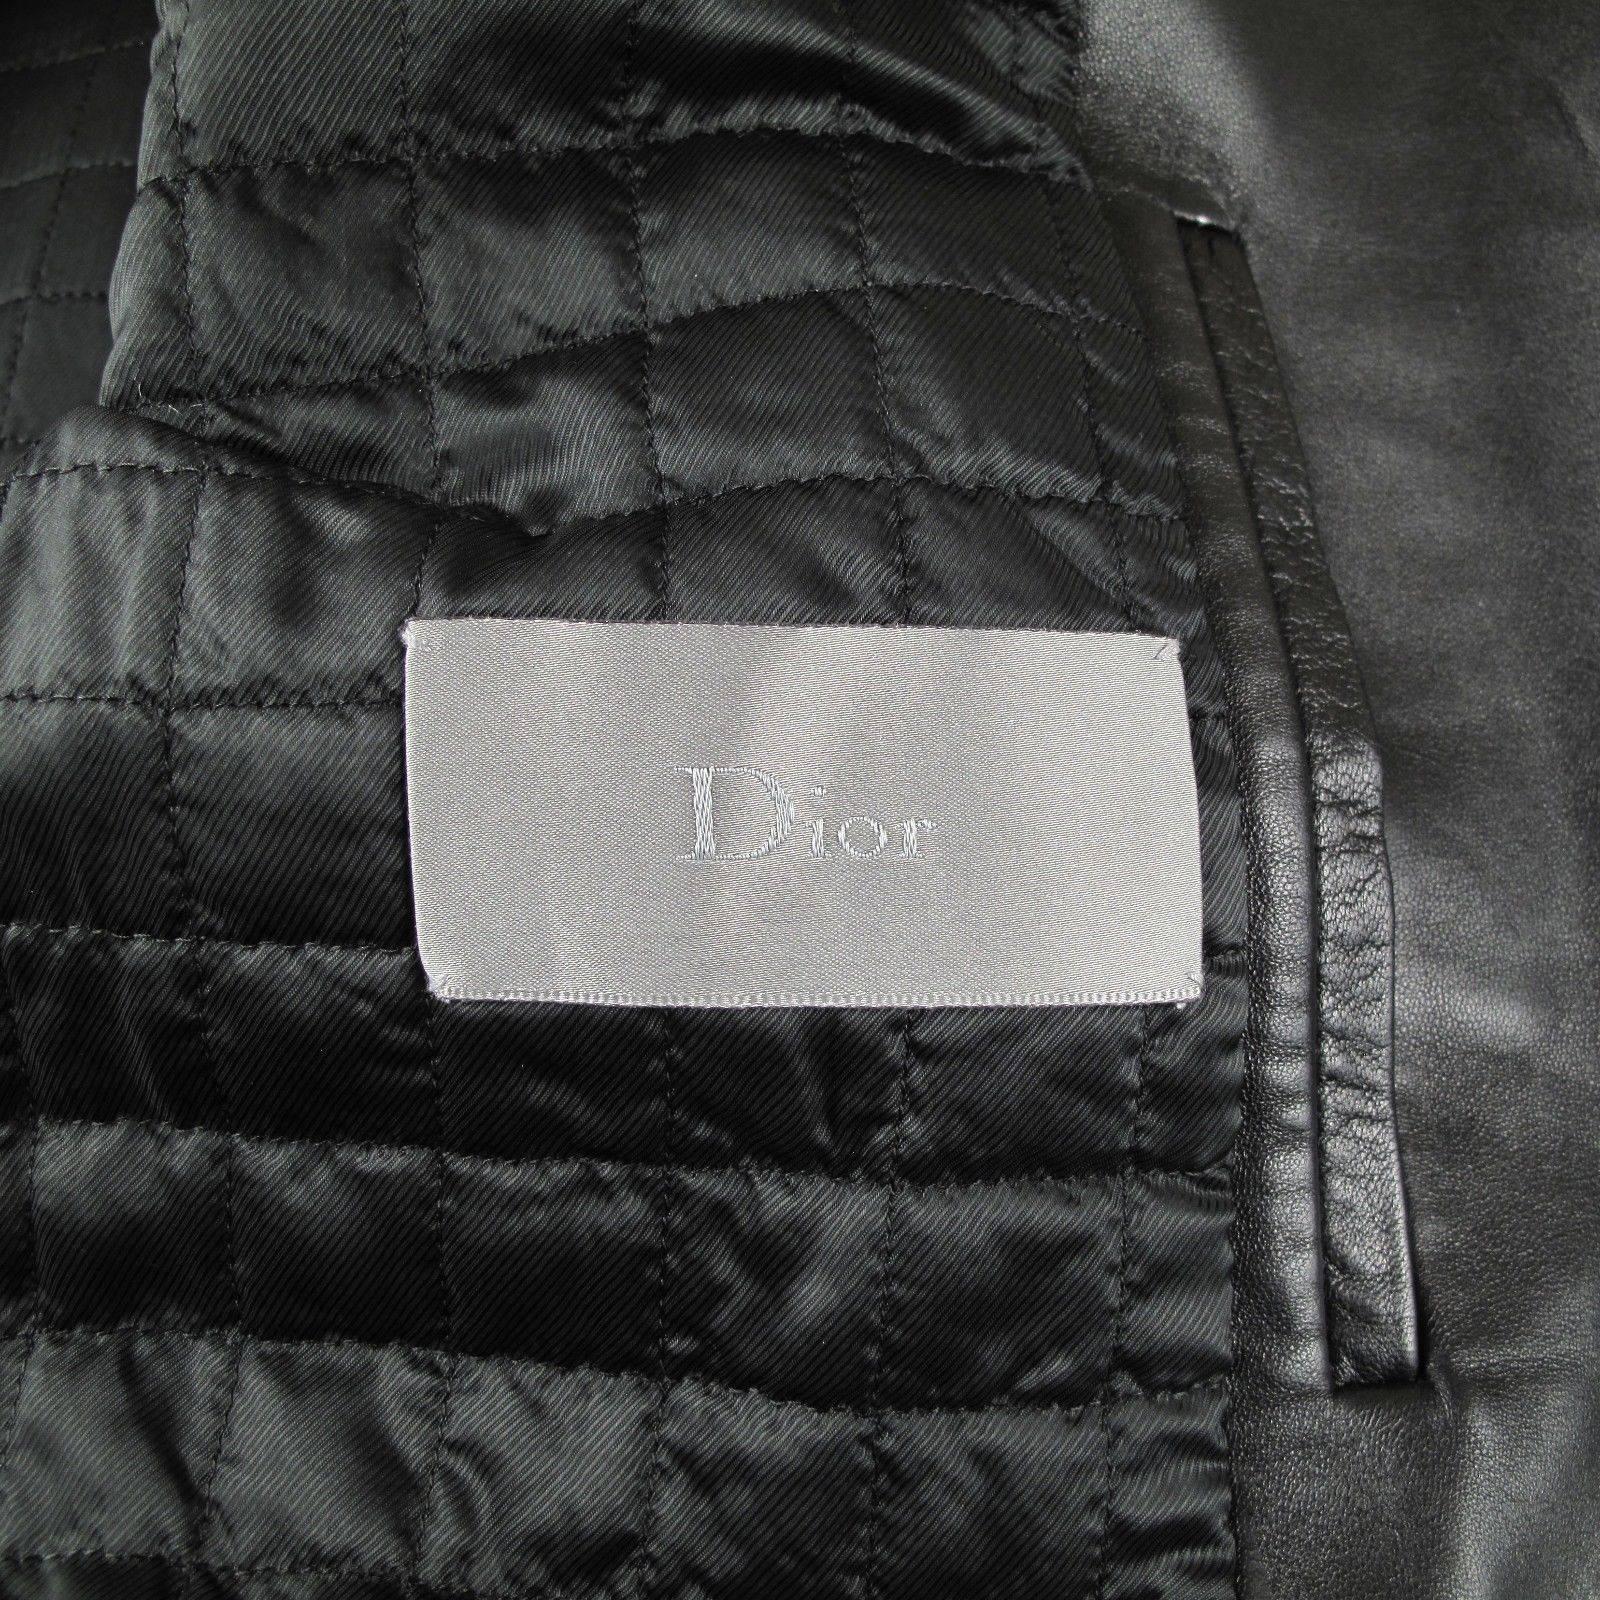 Dior Homme Leather Jacket Large - 52 - Black Zipper Silver Coat Bomber 2007 Hedi 2